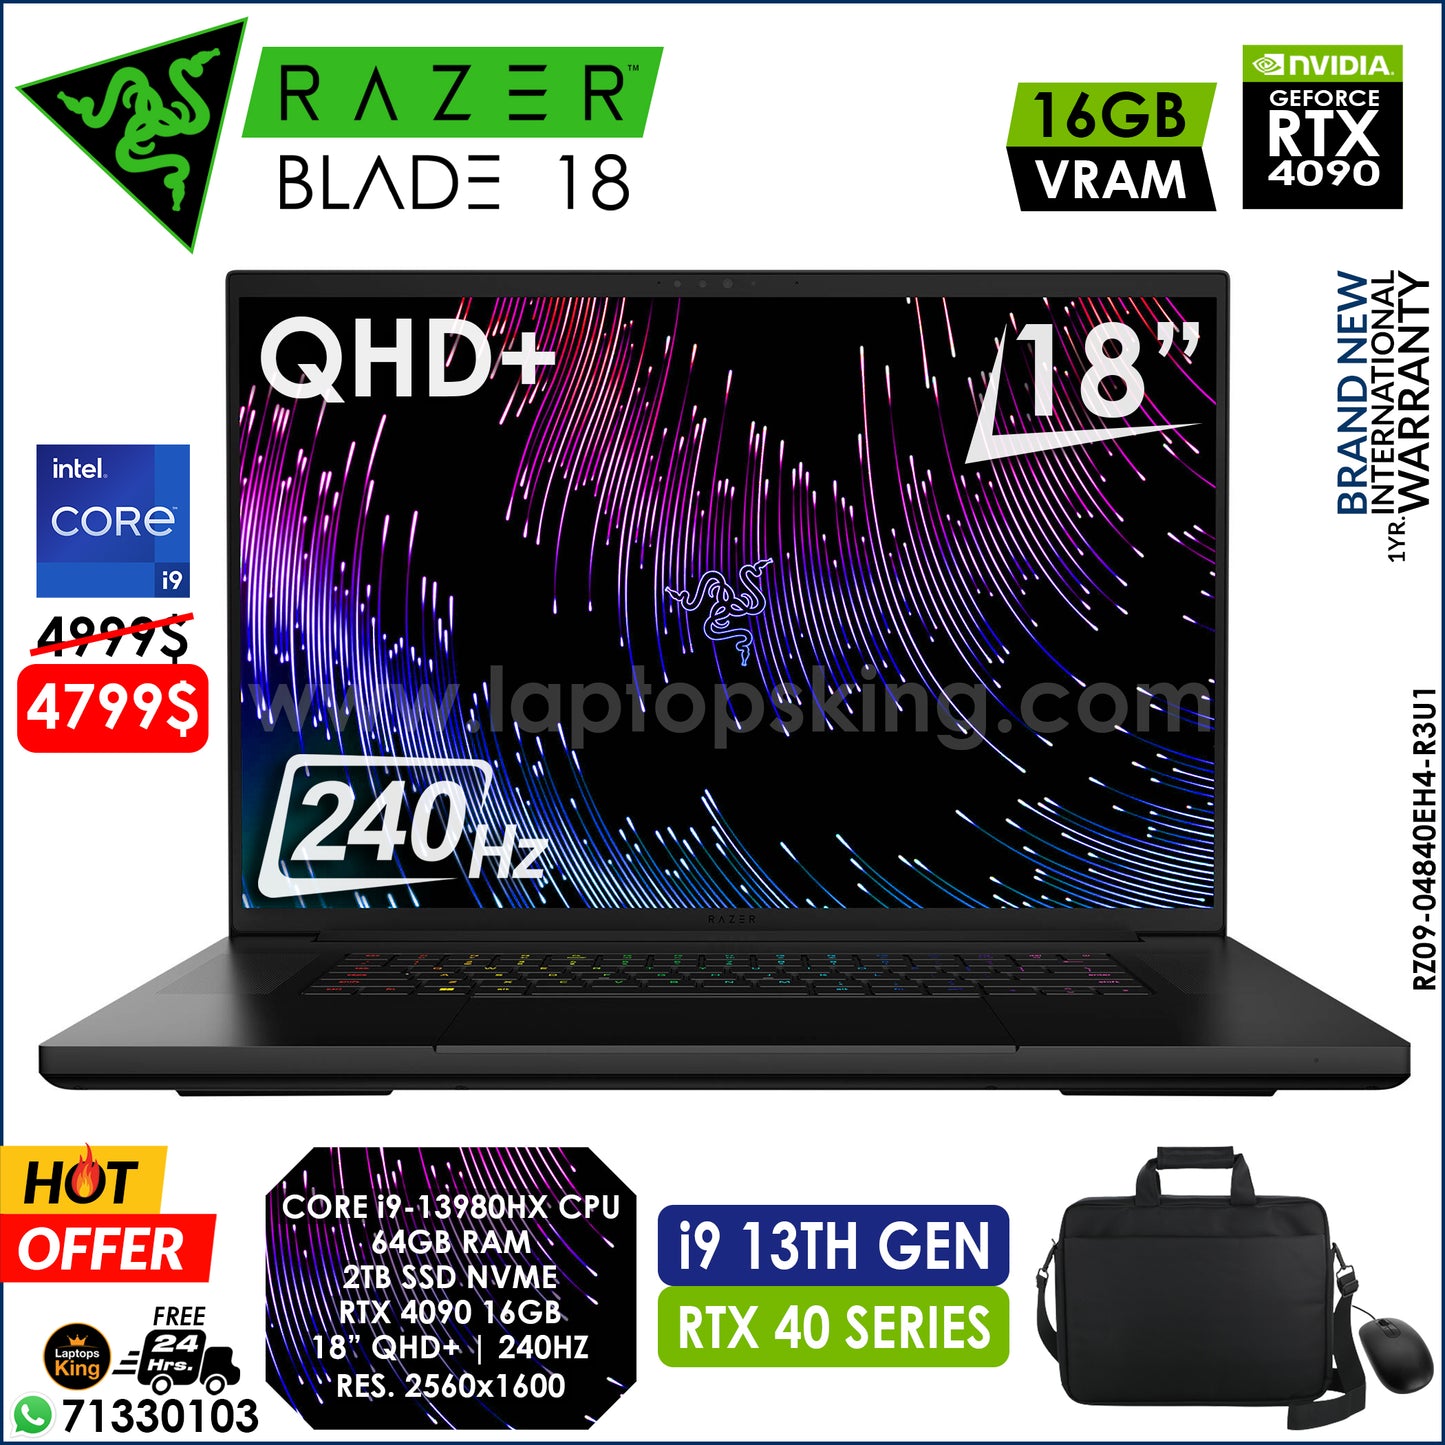 Razer Blade 18 RZ09-04840EH4-R3U1 Core i9-13980hx Rtx 4090 240hz Qhd+ Gaming Laptop (Brand New)